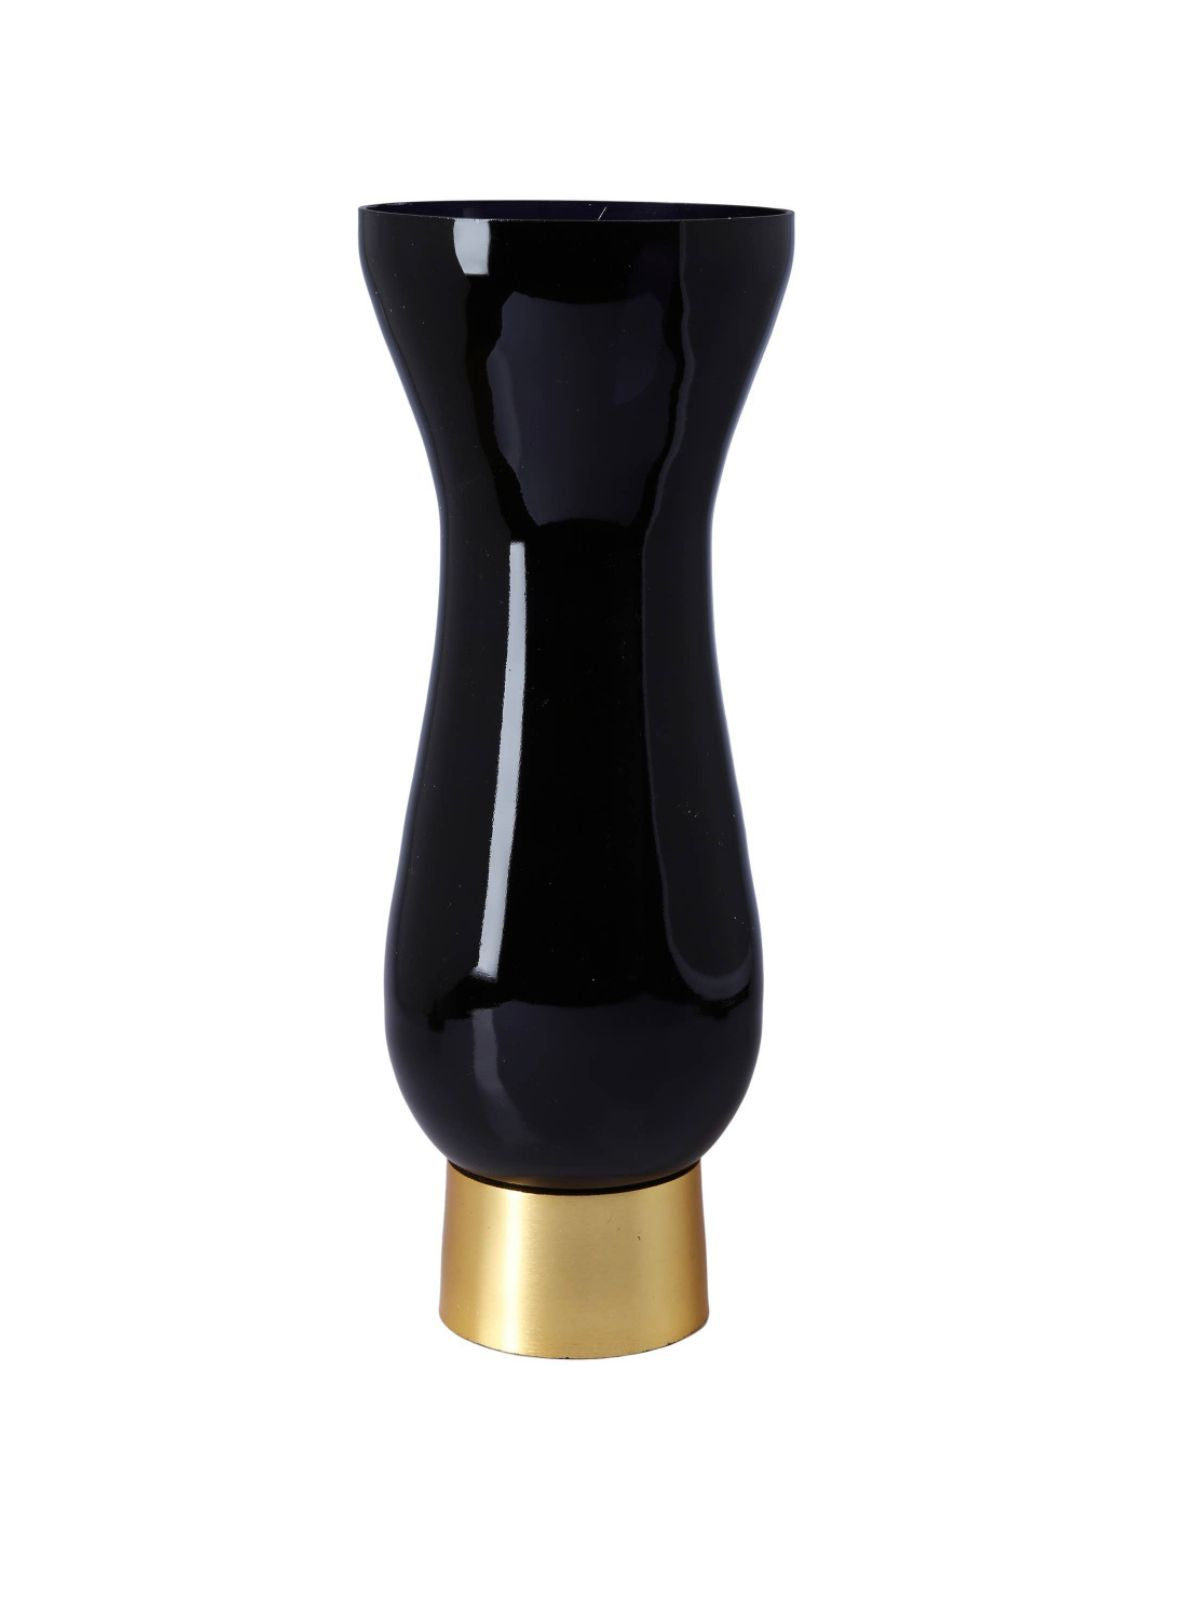 12.5 Black Glass Designer Vase with Luxury Gold Metal Base - KYA Home Decor.